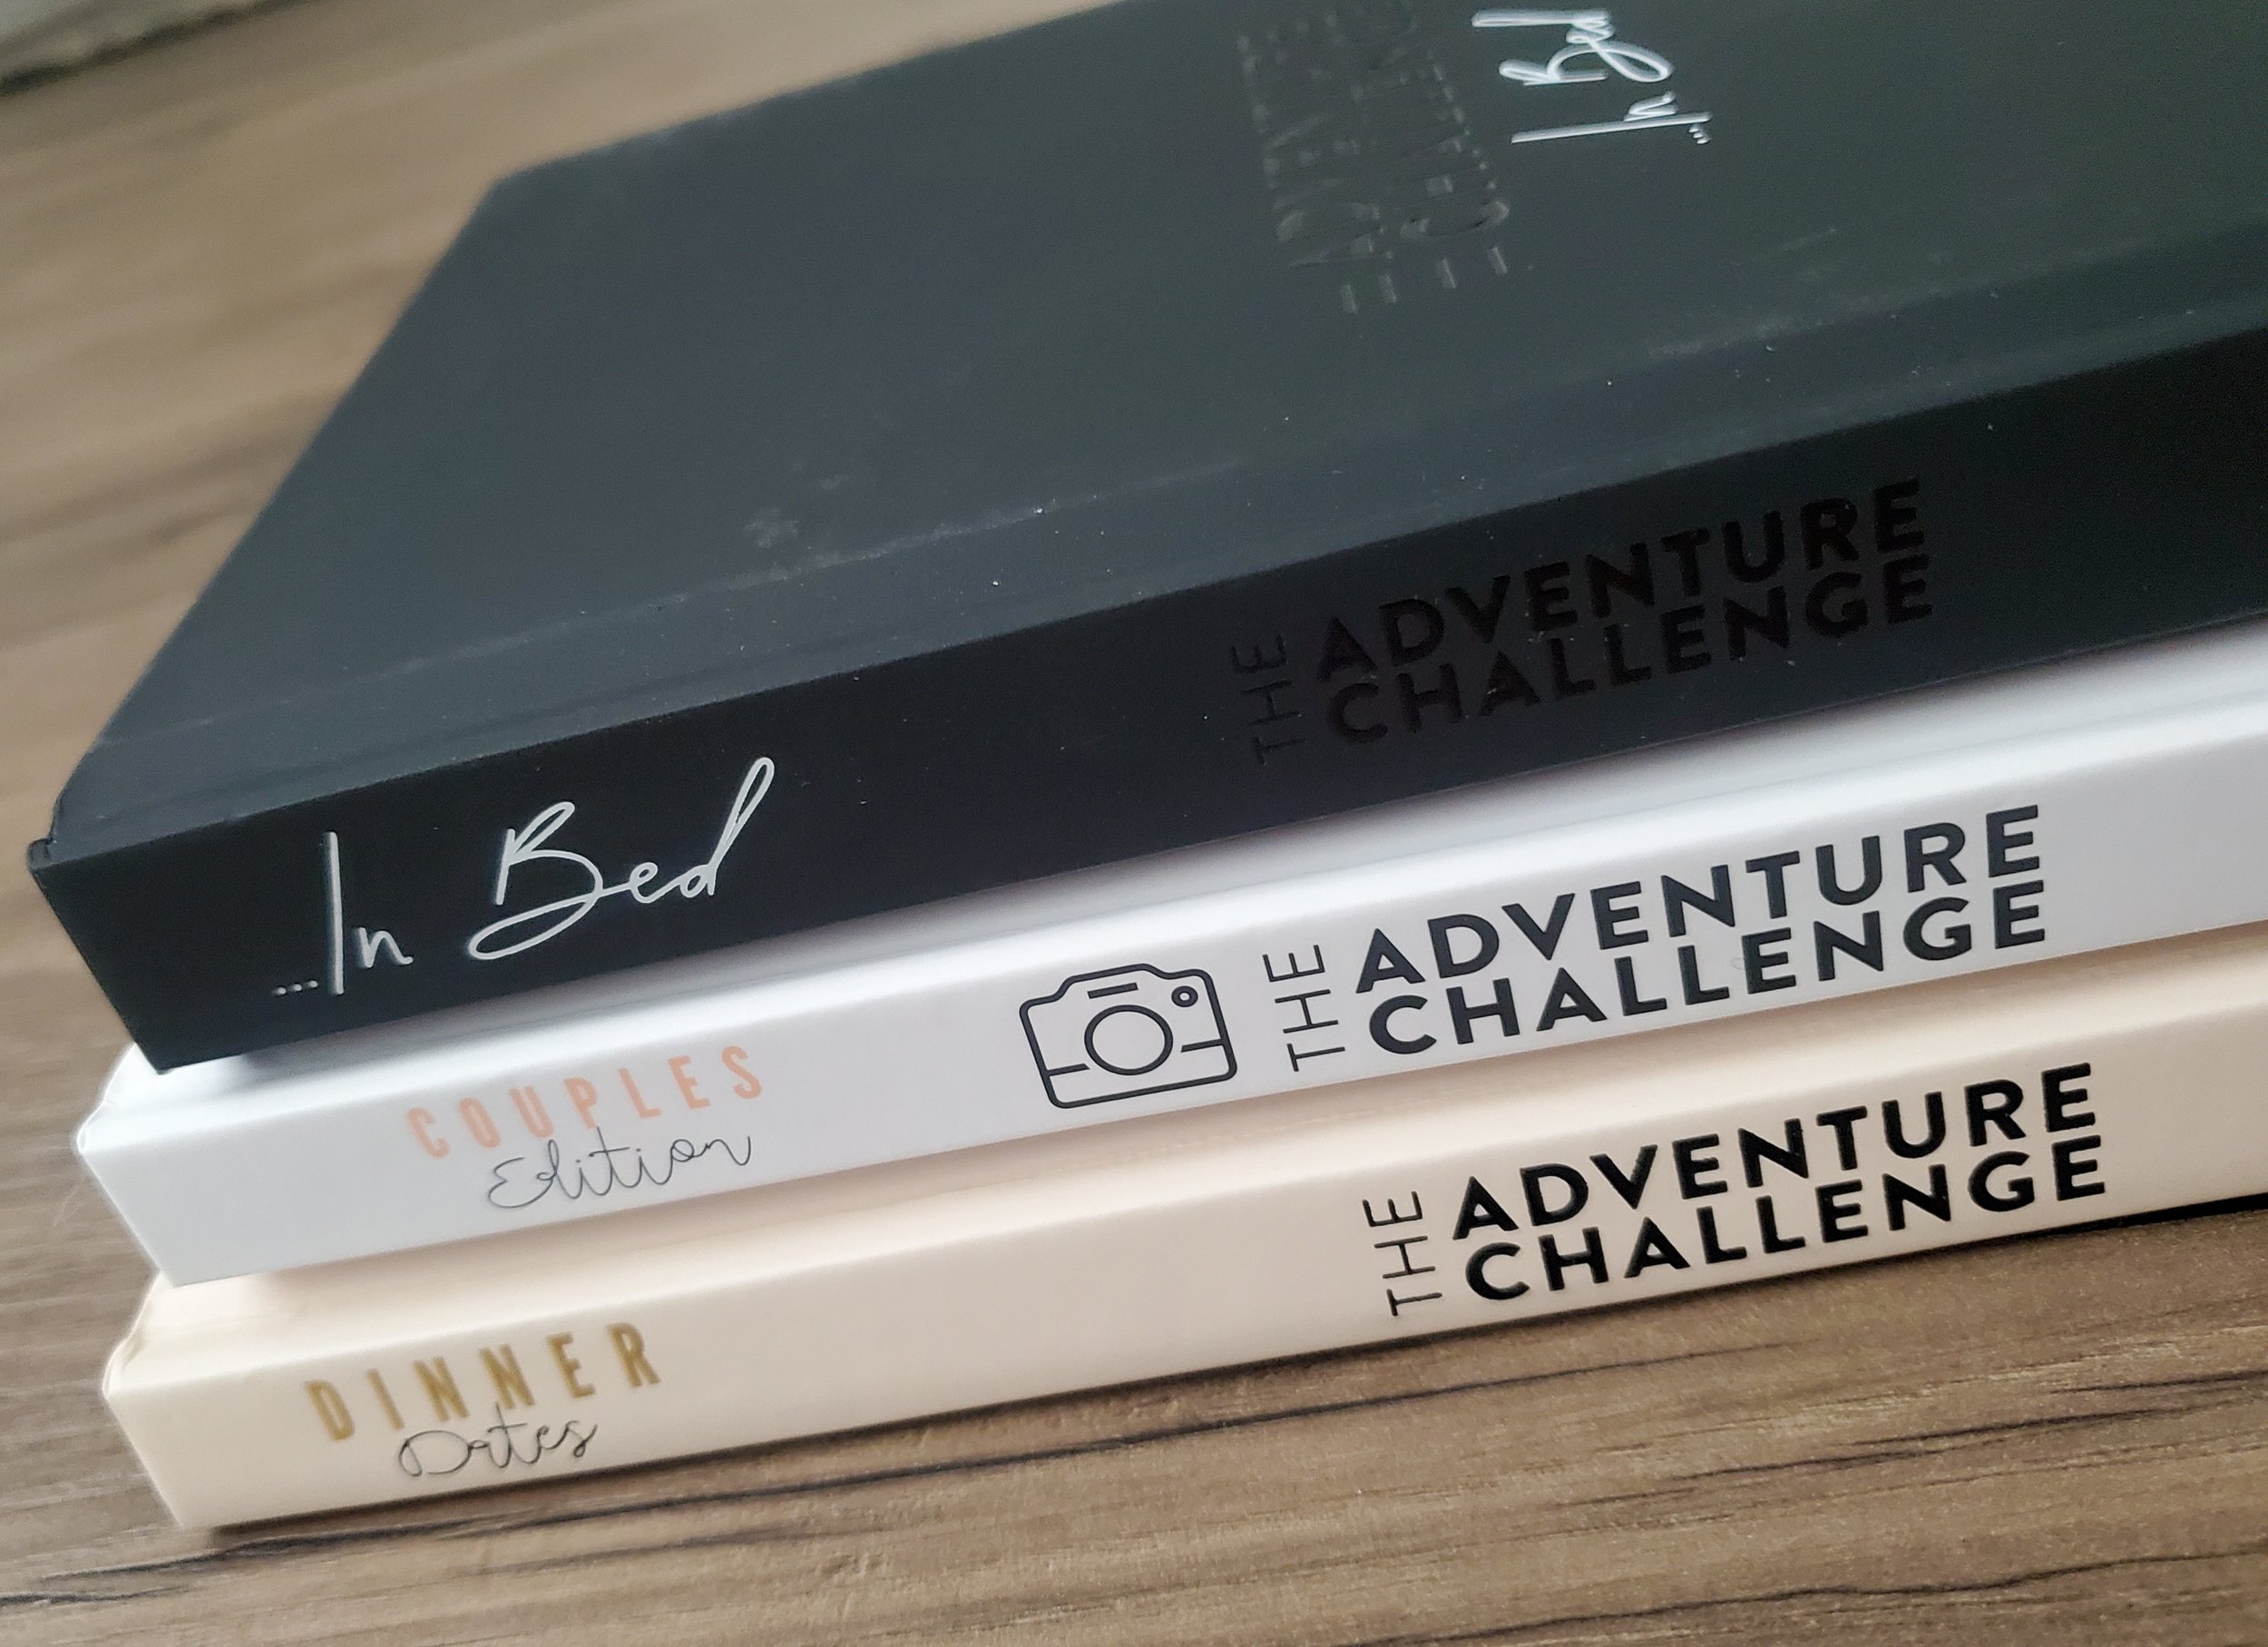 Friends Edition | 50 Scratch-Off Adventure Activities | The Adventure Challenge